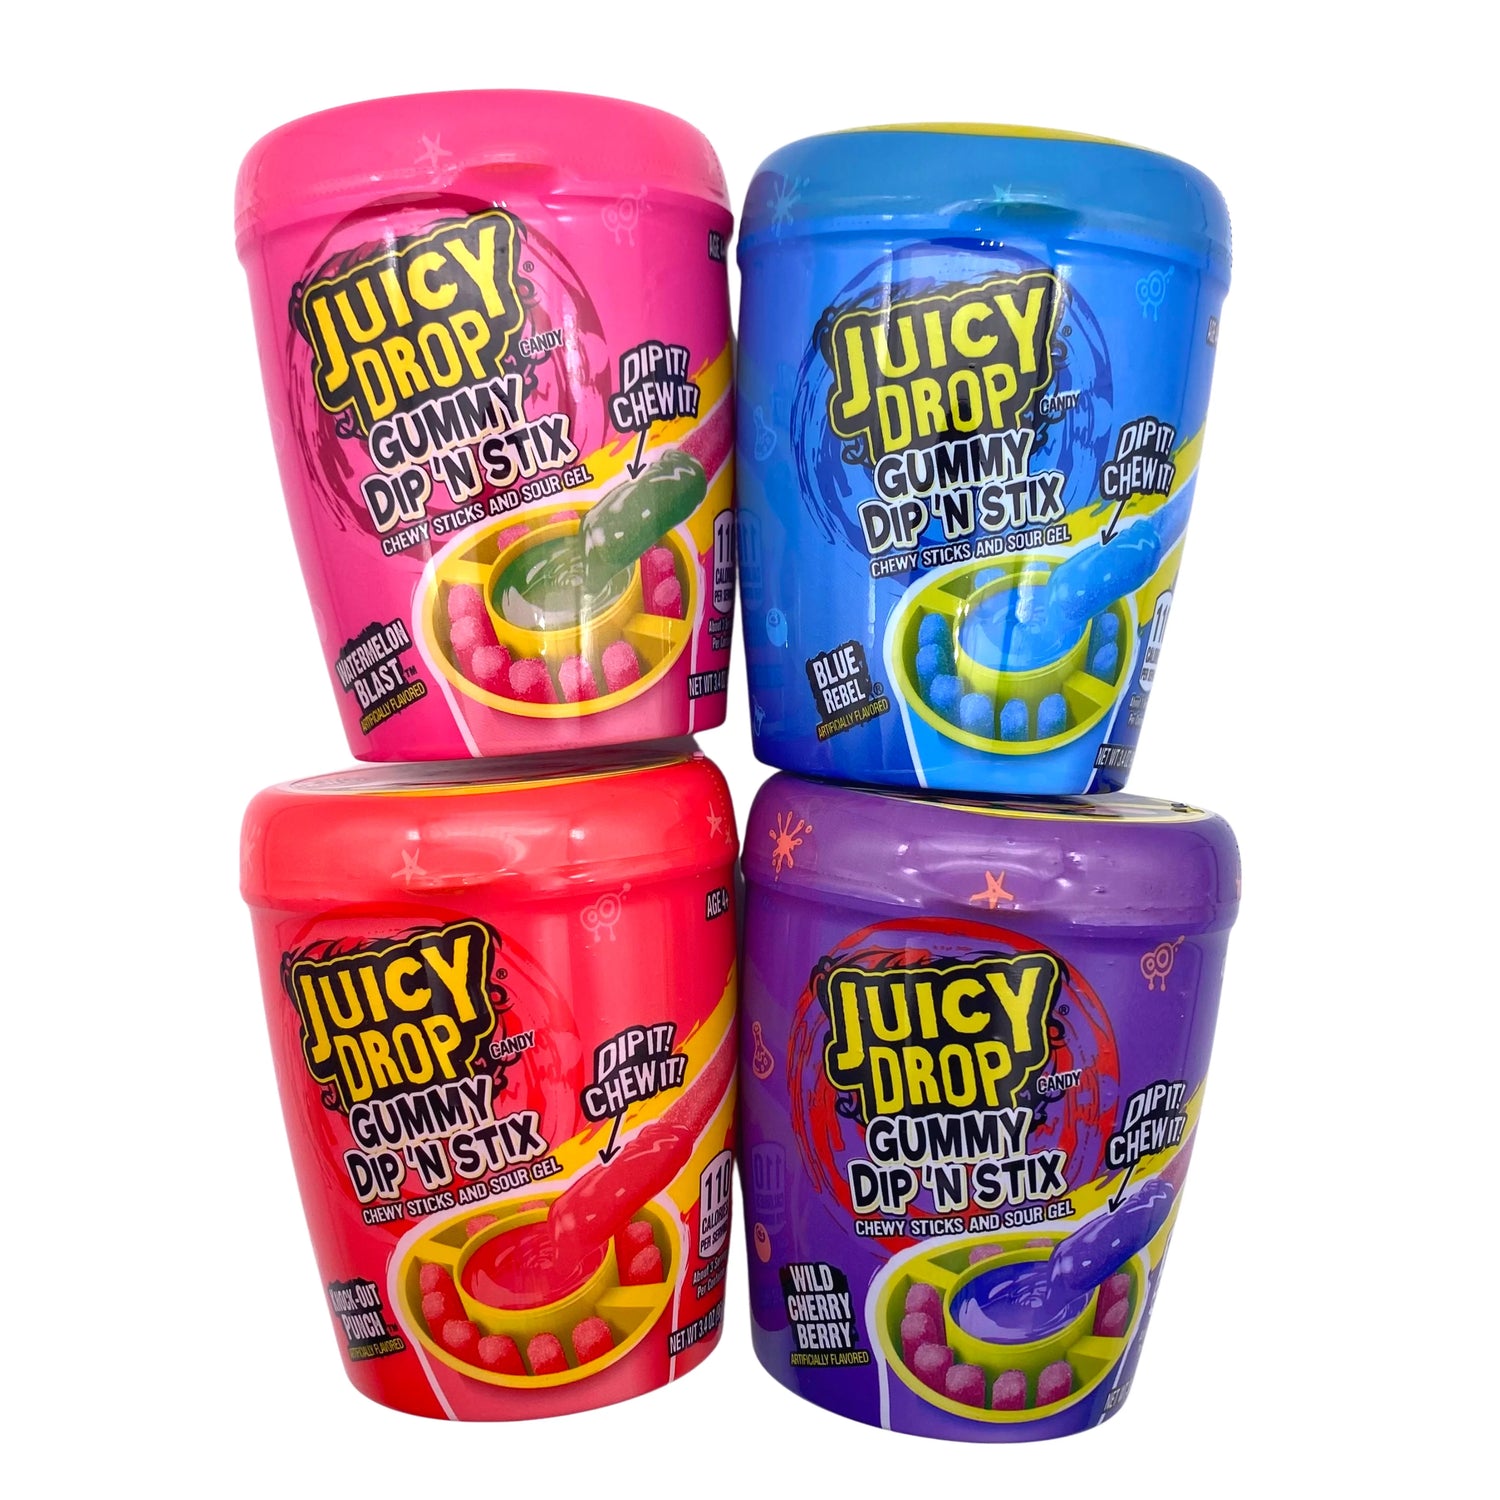 Juicy Drop Gummy Dip n Stix USA FLAVOURS